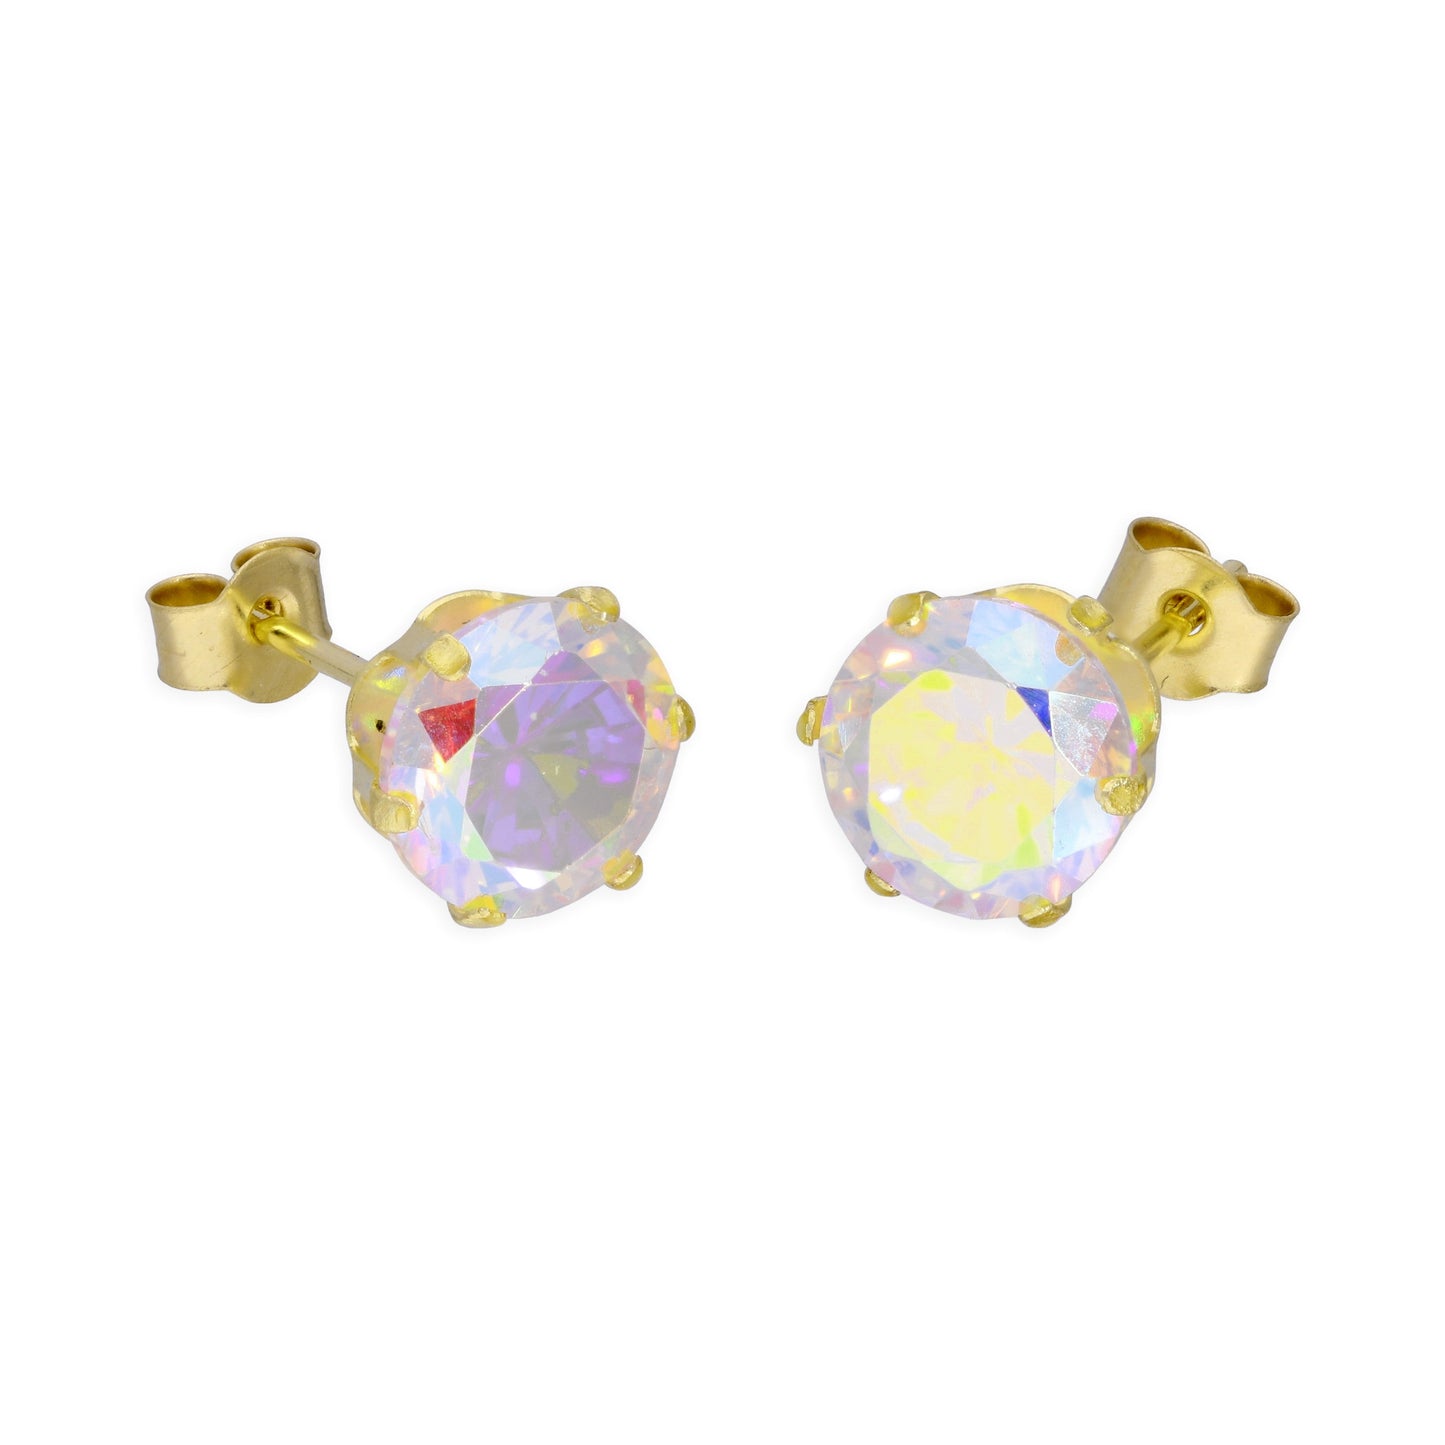 9ct Yellow Gold & Aurora Borealis CZ Crystal Stud Earrings 4mm - 6mm